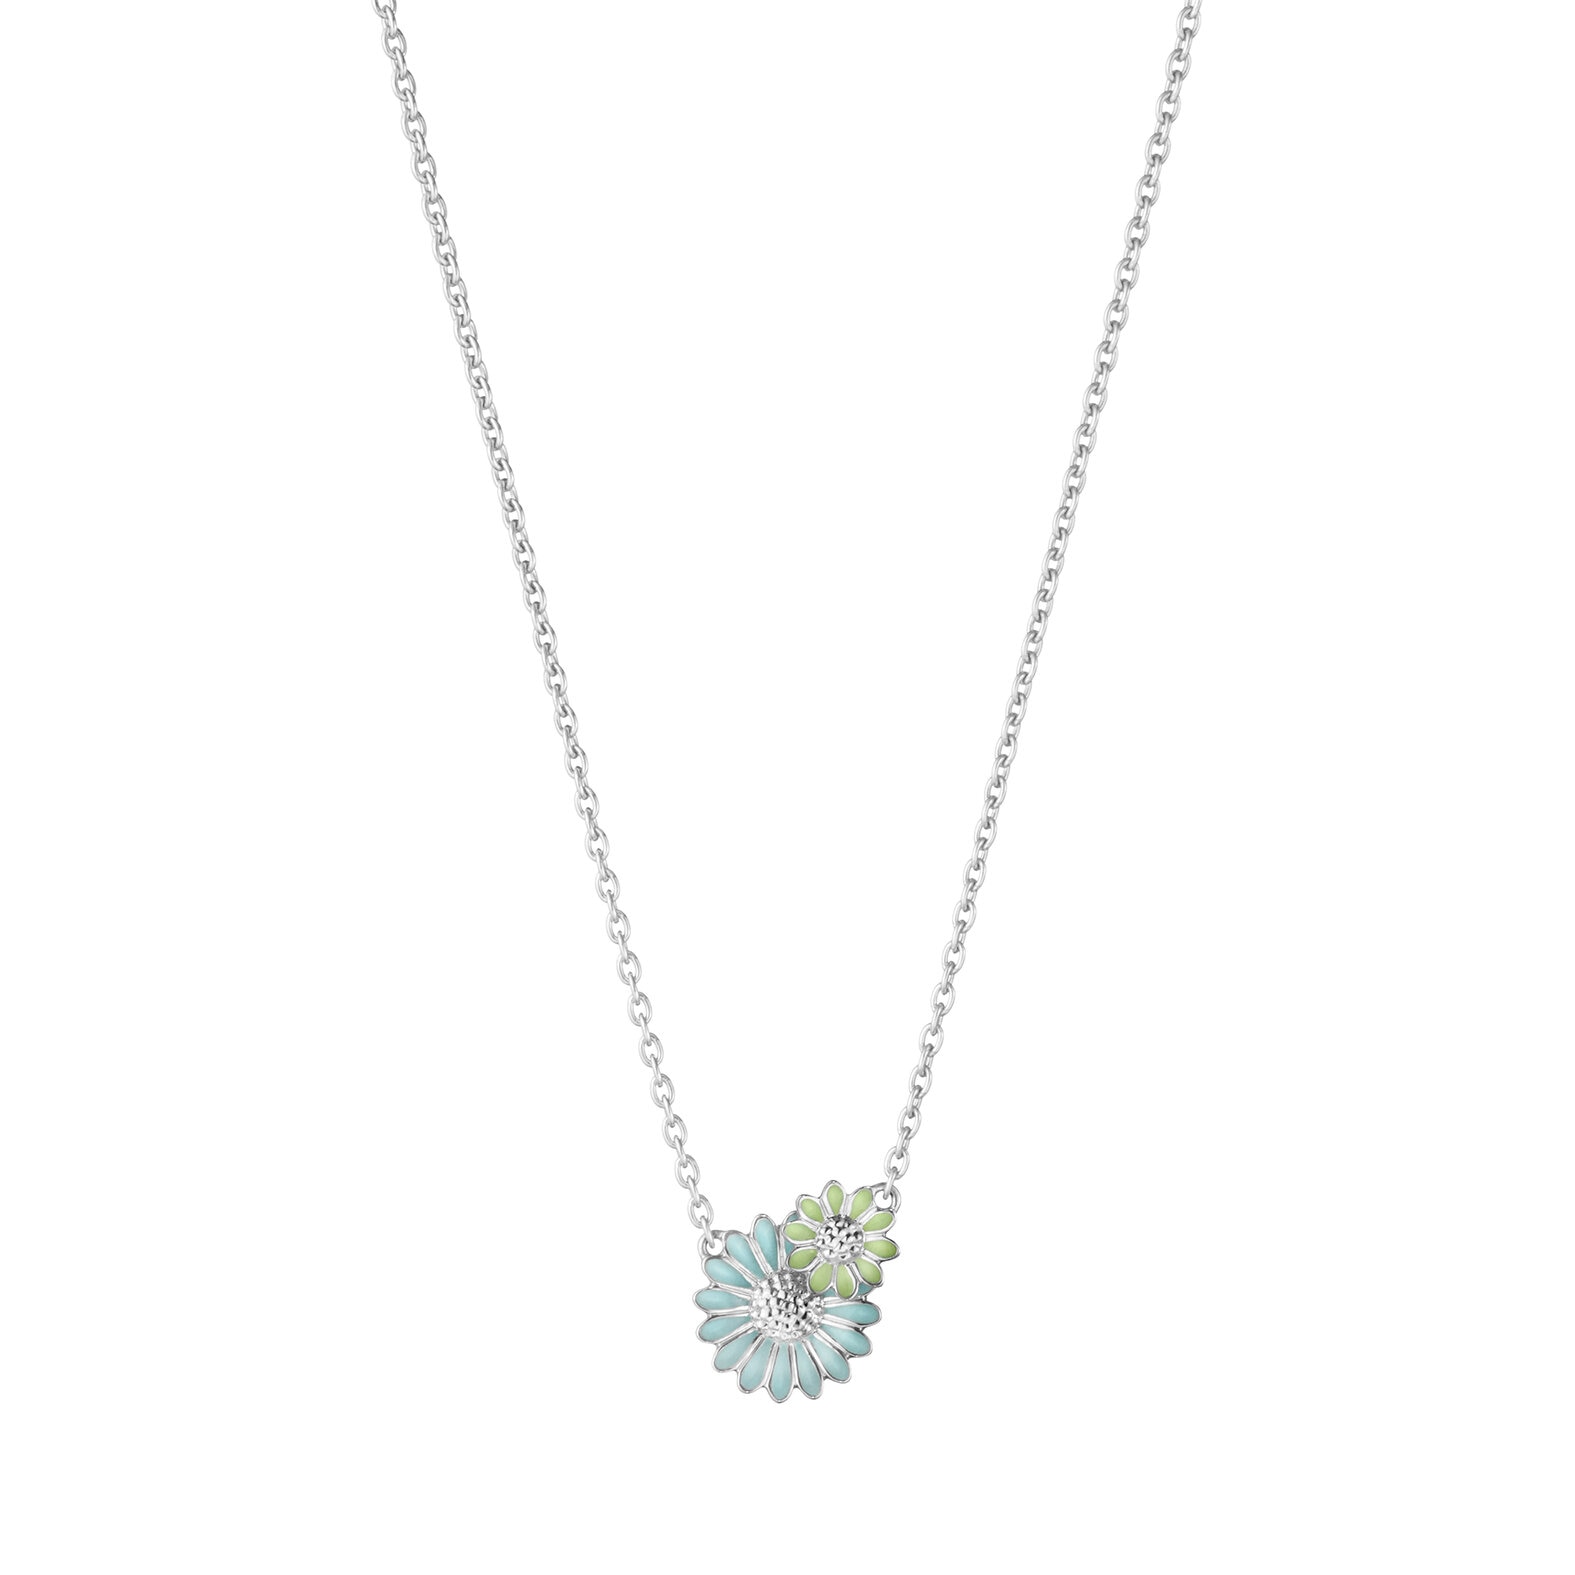 Daisy necklace (blue/green)